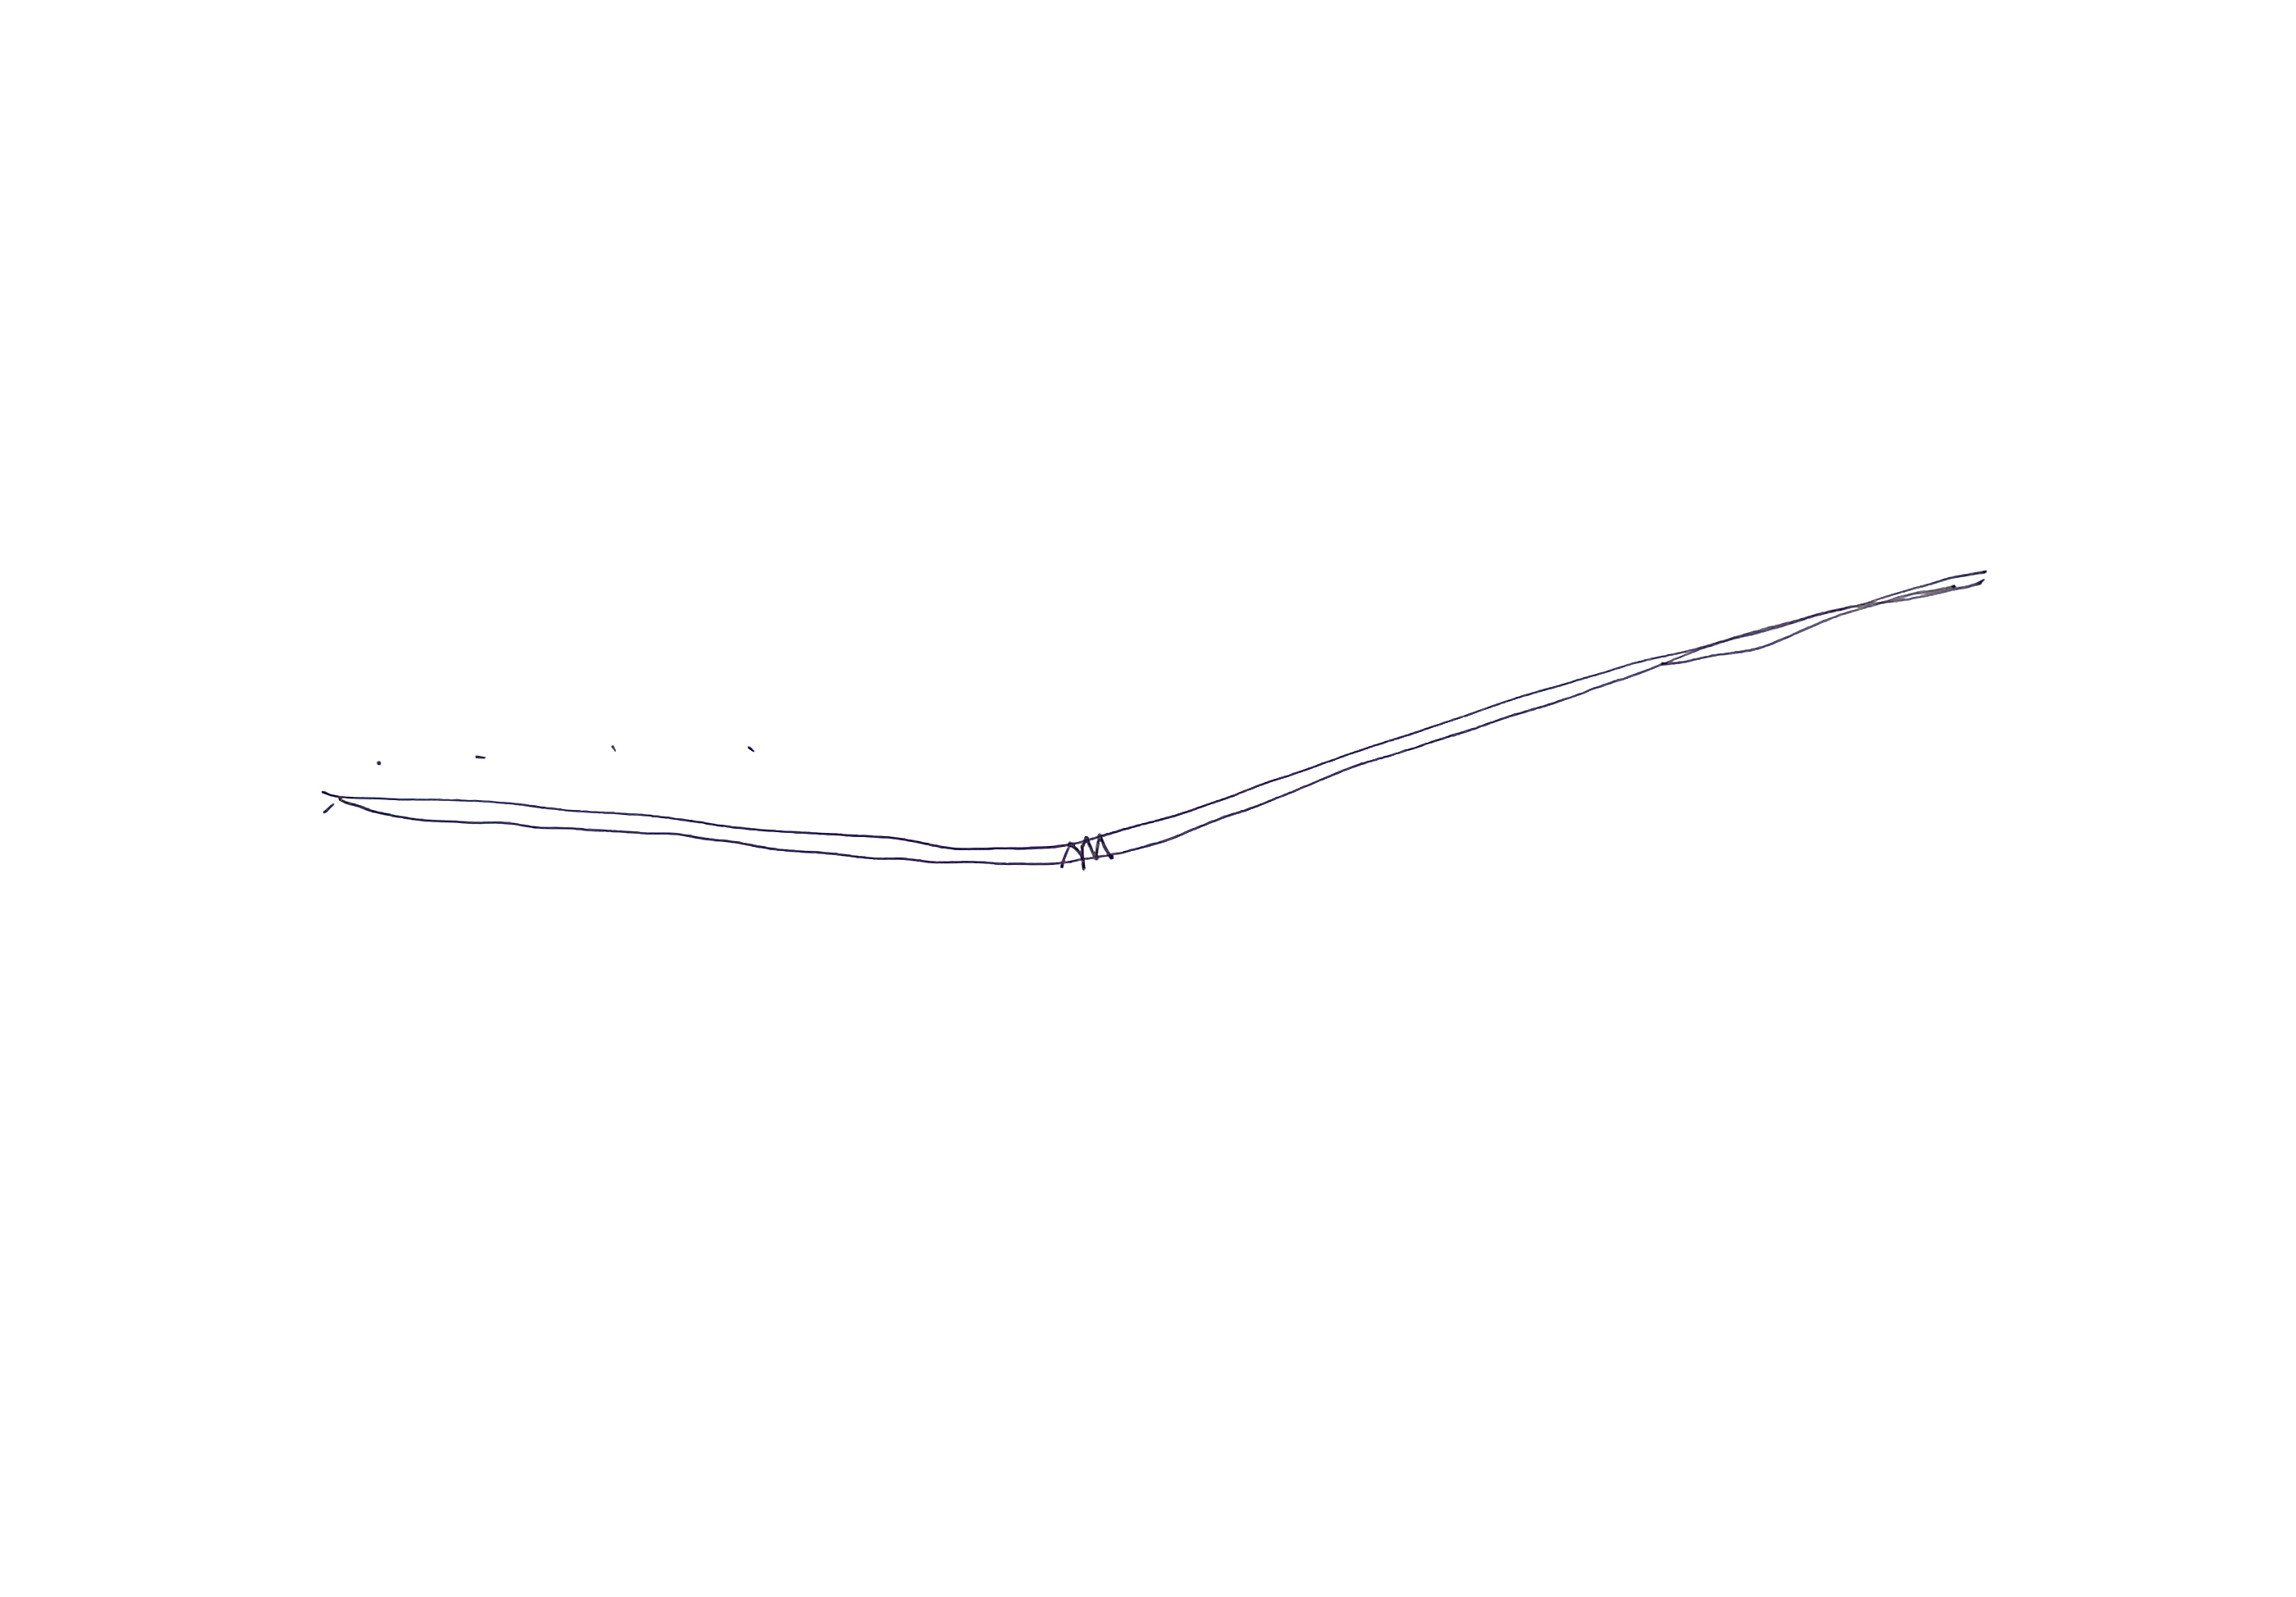 pen drawing of a bendy straw lying sideways